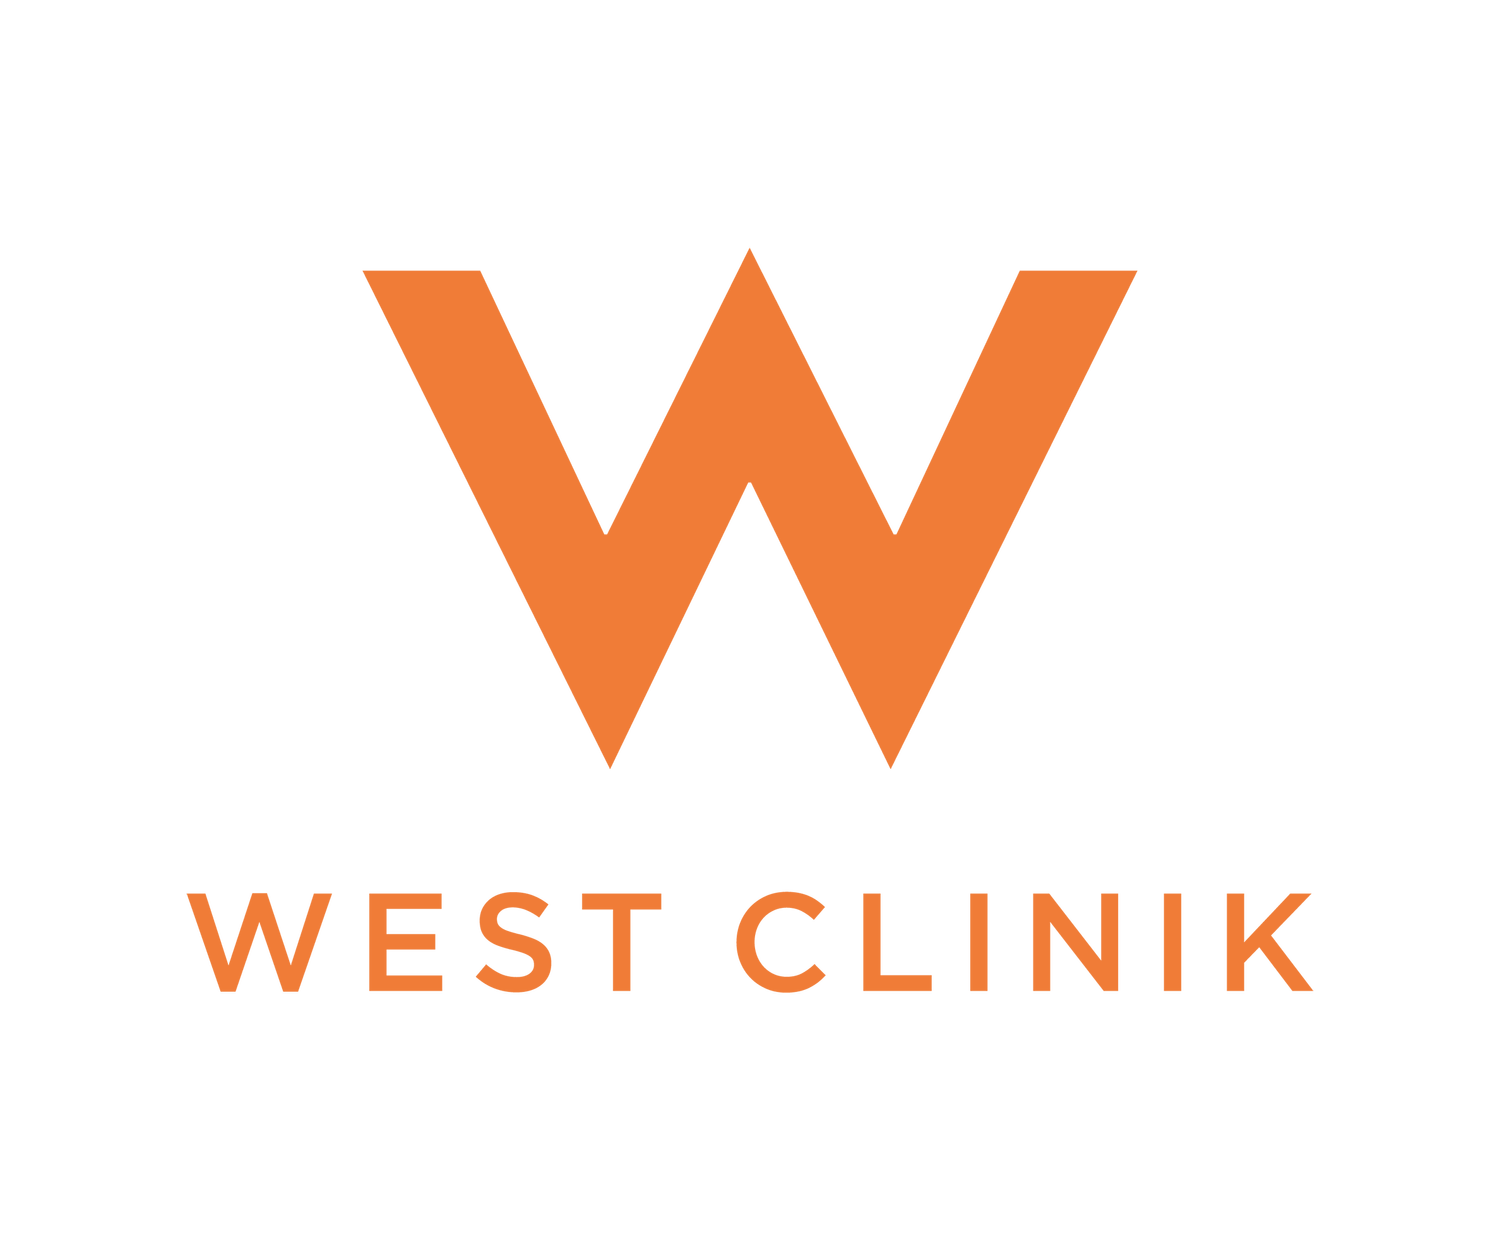 West Clinik - Your Premium Cannabis Dispensary - Santa Ana, CA